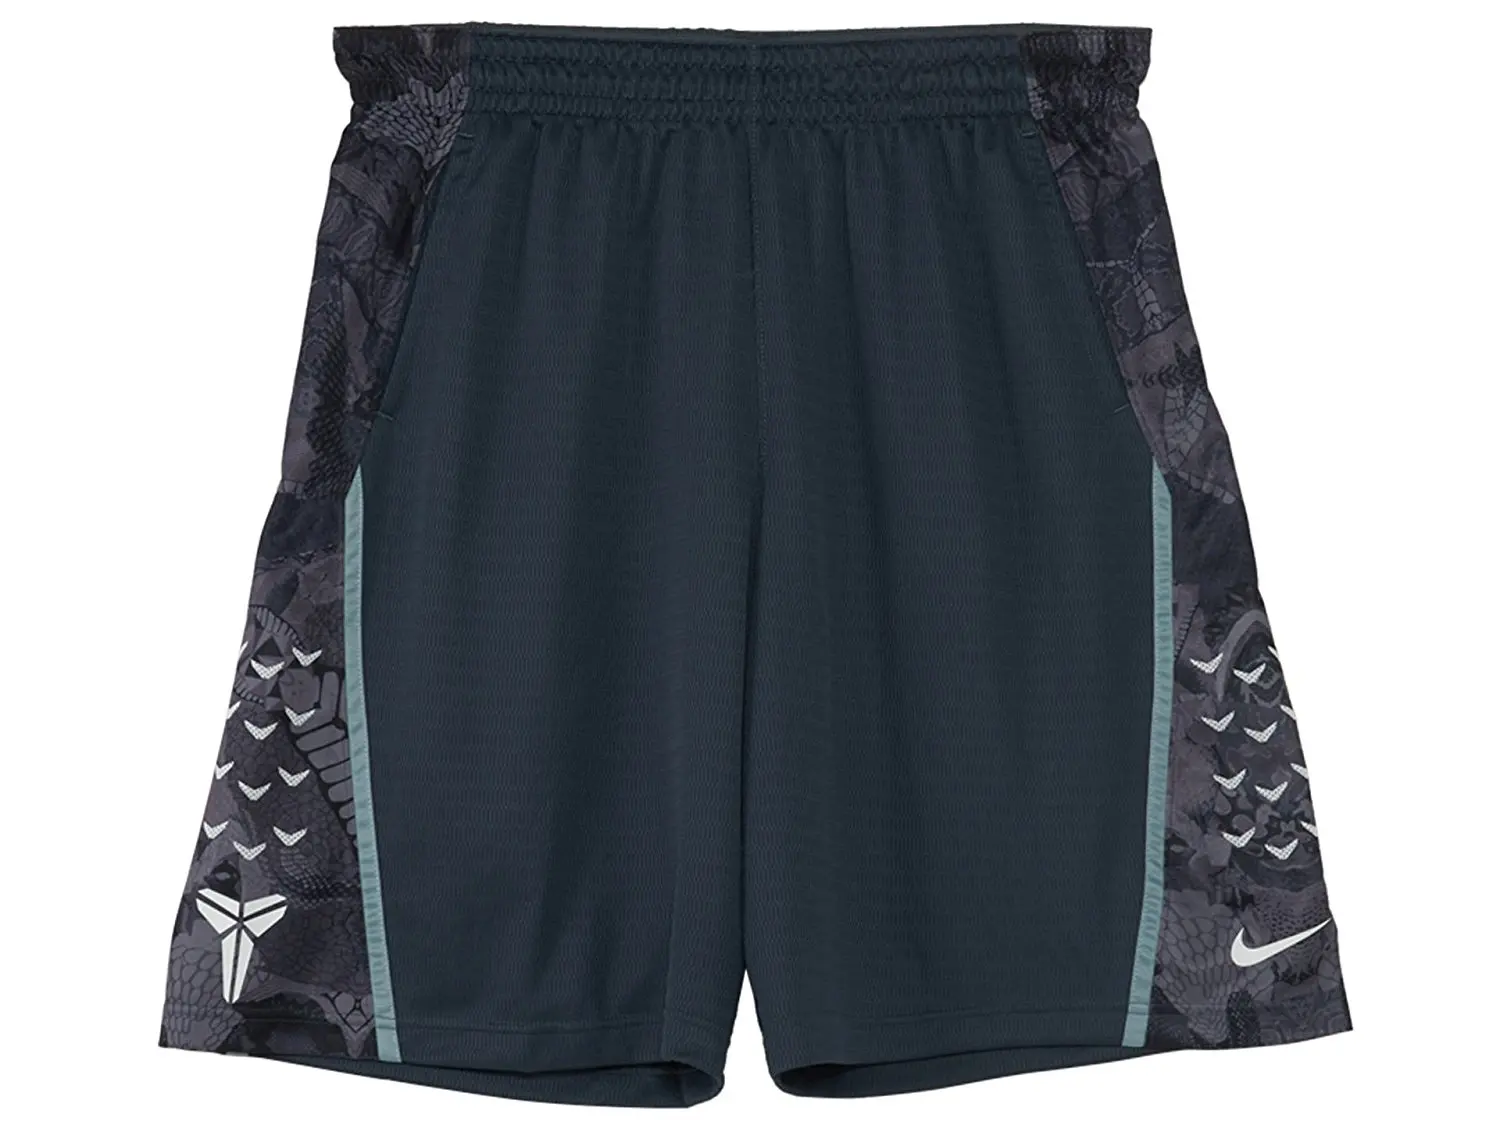 Buy Nike Kobe Emerge Elite Shorts New 